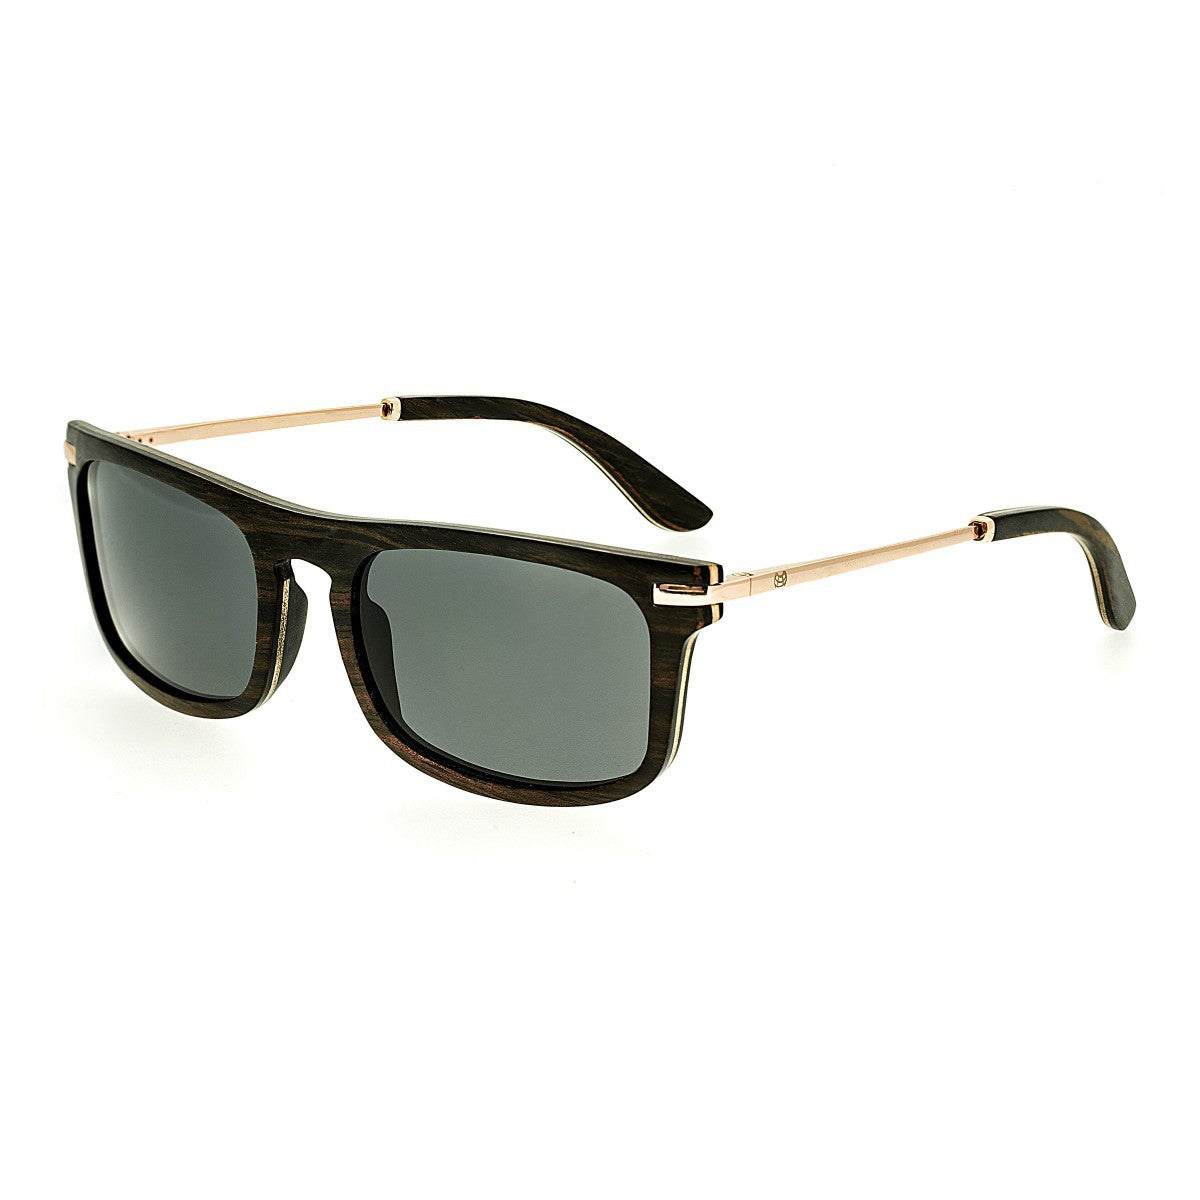 Earth Wood Queensland Unisex Sunglasses Brown Frame Blue Lens